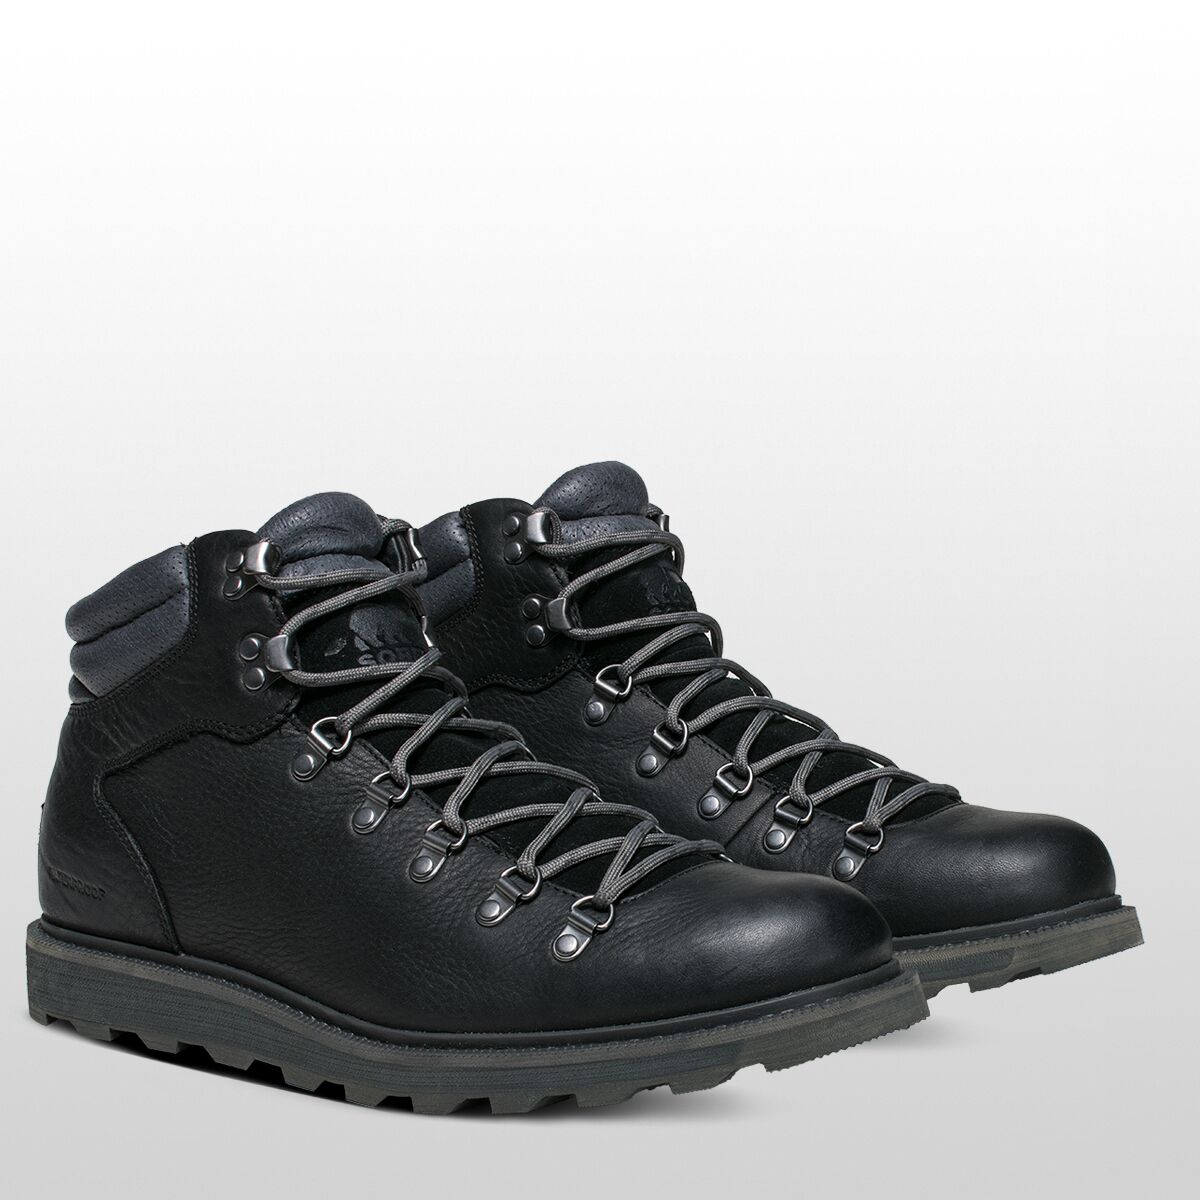 SOREL Madson Hiker II WP Boot - Men's - Footwear